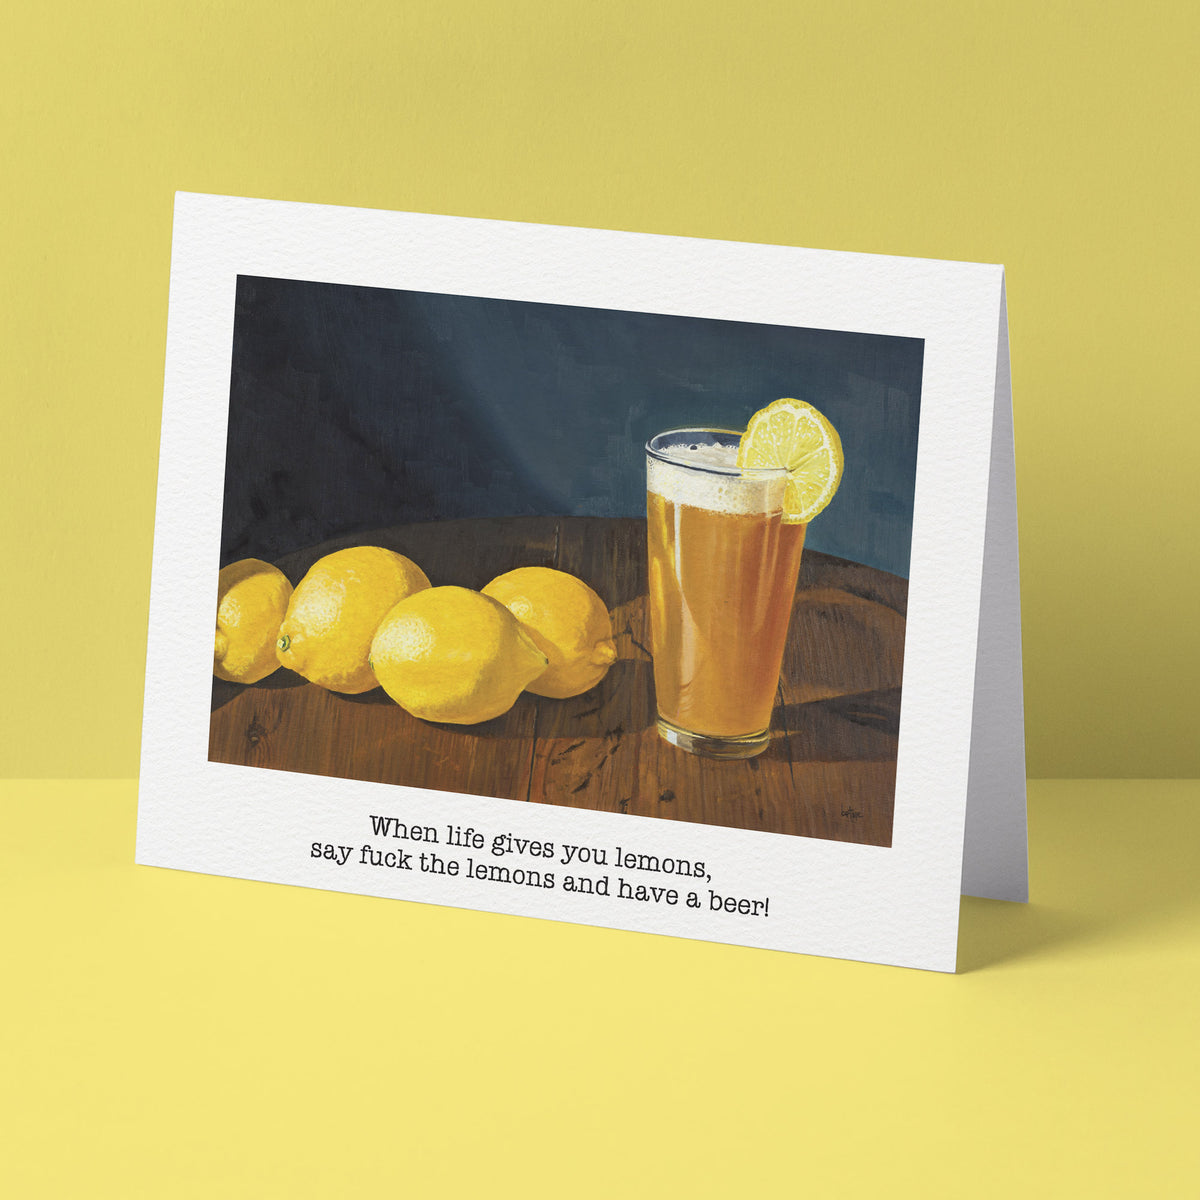 "When life gives you lemons, say fuck the lemons" Greeting Card